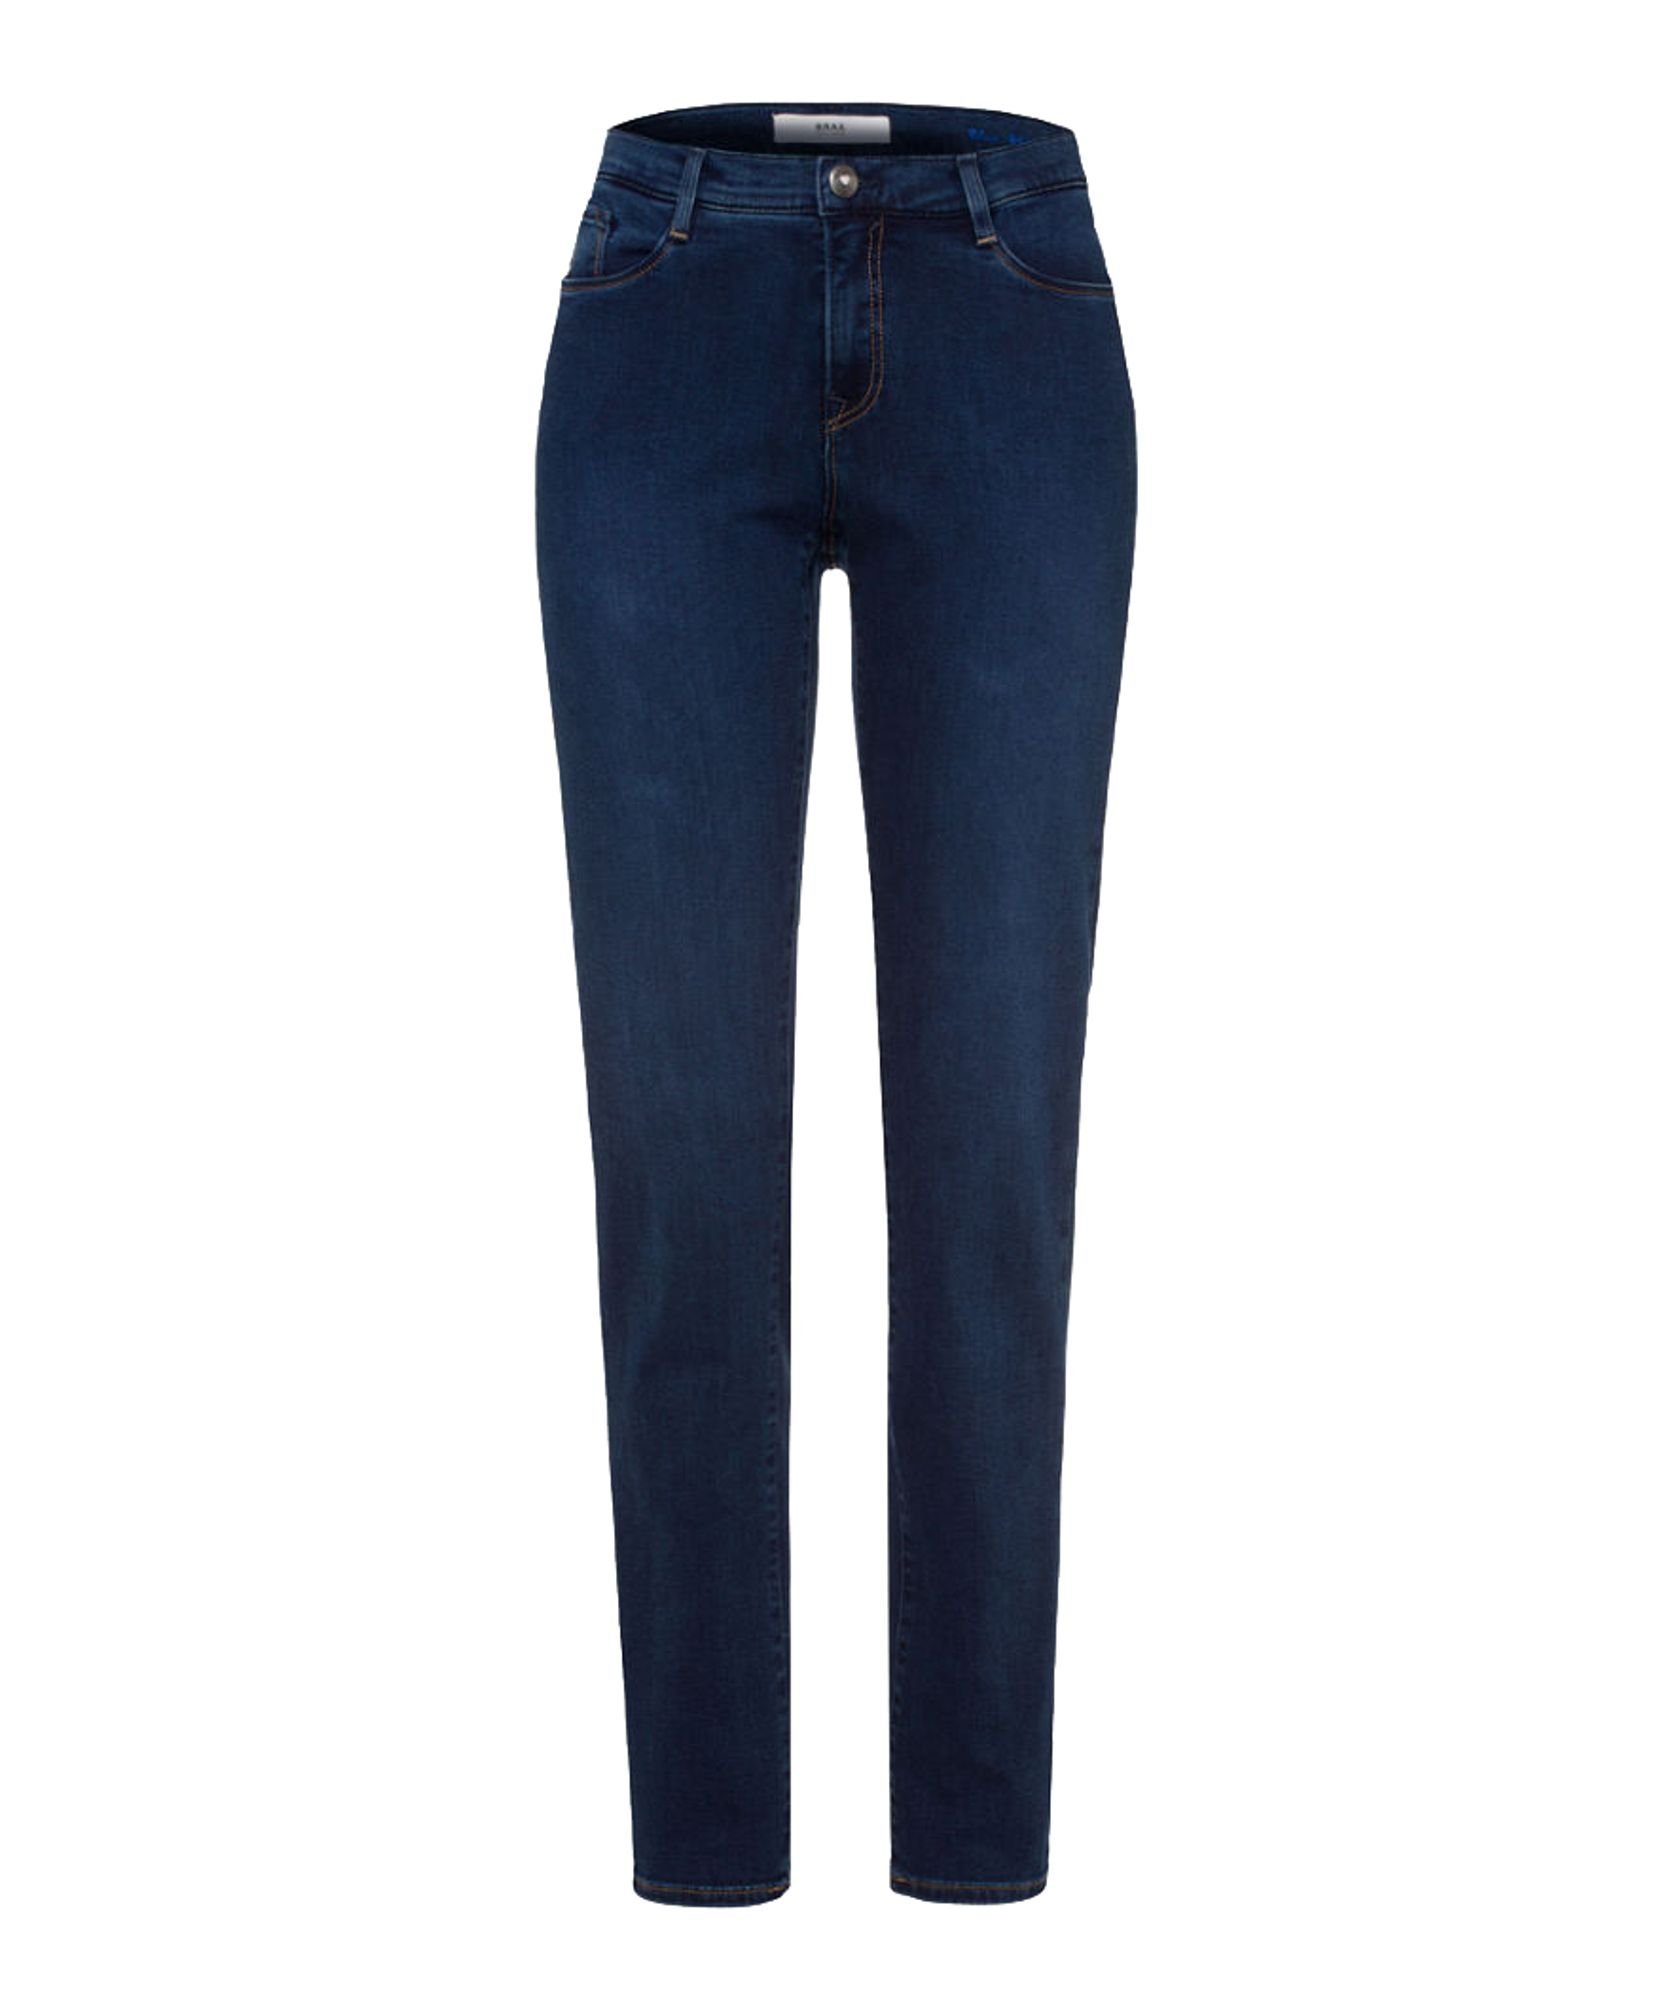 Exklusiver Sonderpreisverkauf Brax 5-Pocket-Jeans 70-4000 USED (25) SLIGHTLY REGULAR BLUE